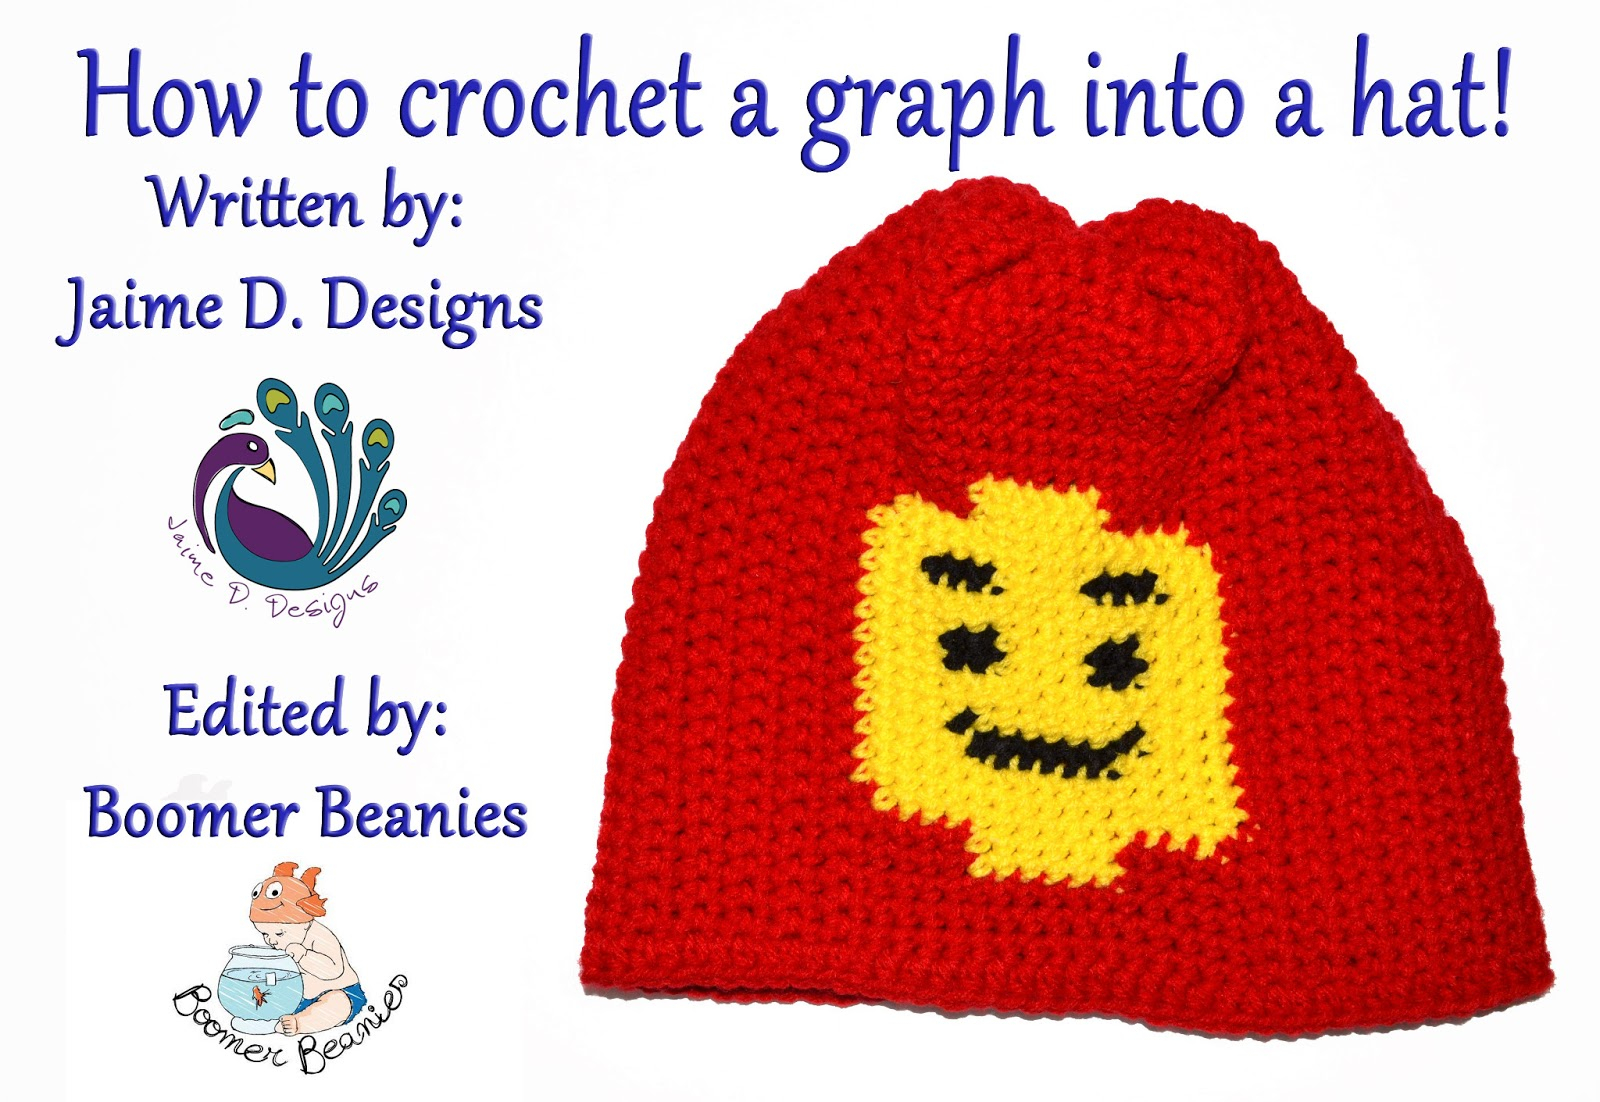 Crochet Graph Patterns Jaime D Designs How To Crochet A Graph Into A Hat